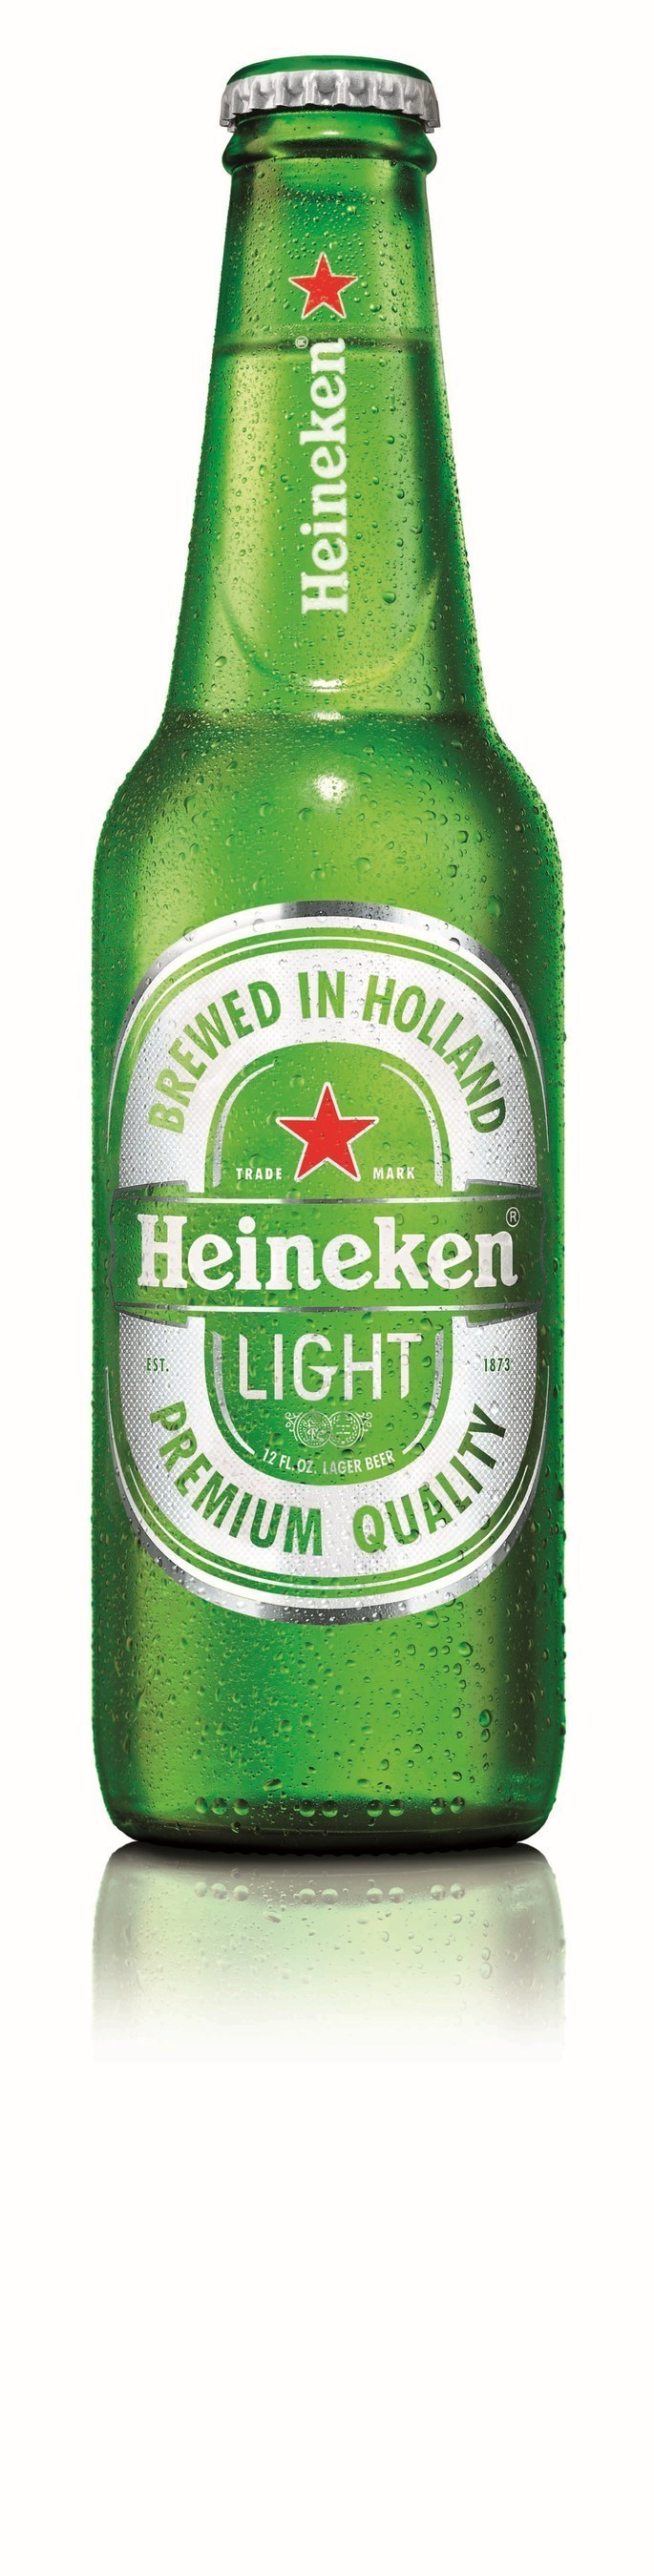 Heineken Light Bottle (PRNewsFoto/Heineken USA)